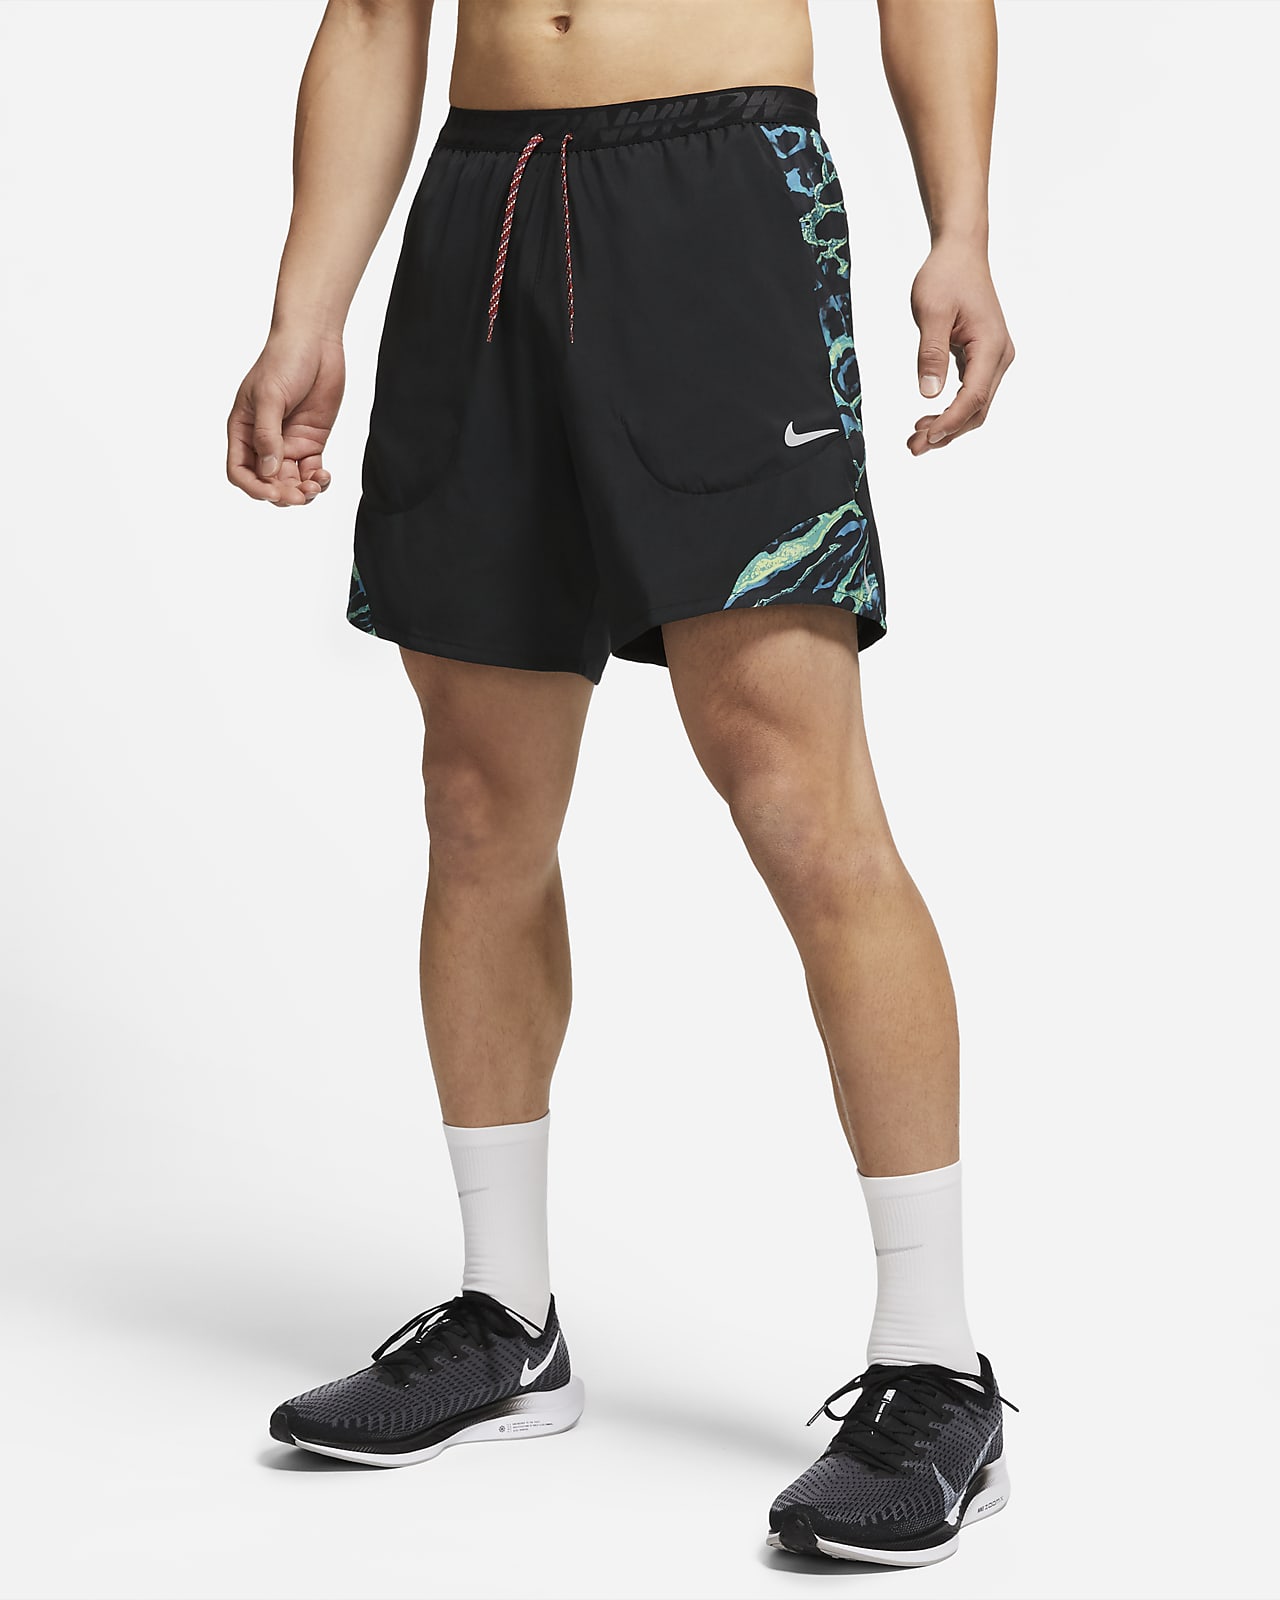 Nike公式 ナイキ フレックス ストライド ワイルド ラン メンズ ランニングショートパンツ インナー付き オンラインストア 通販サイト